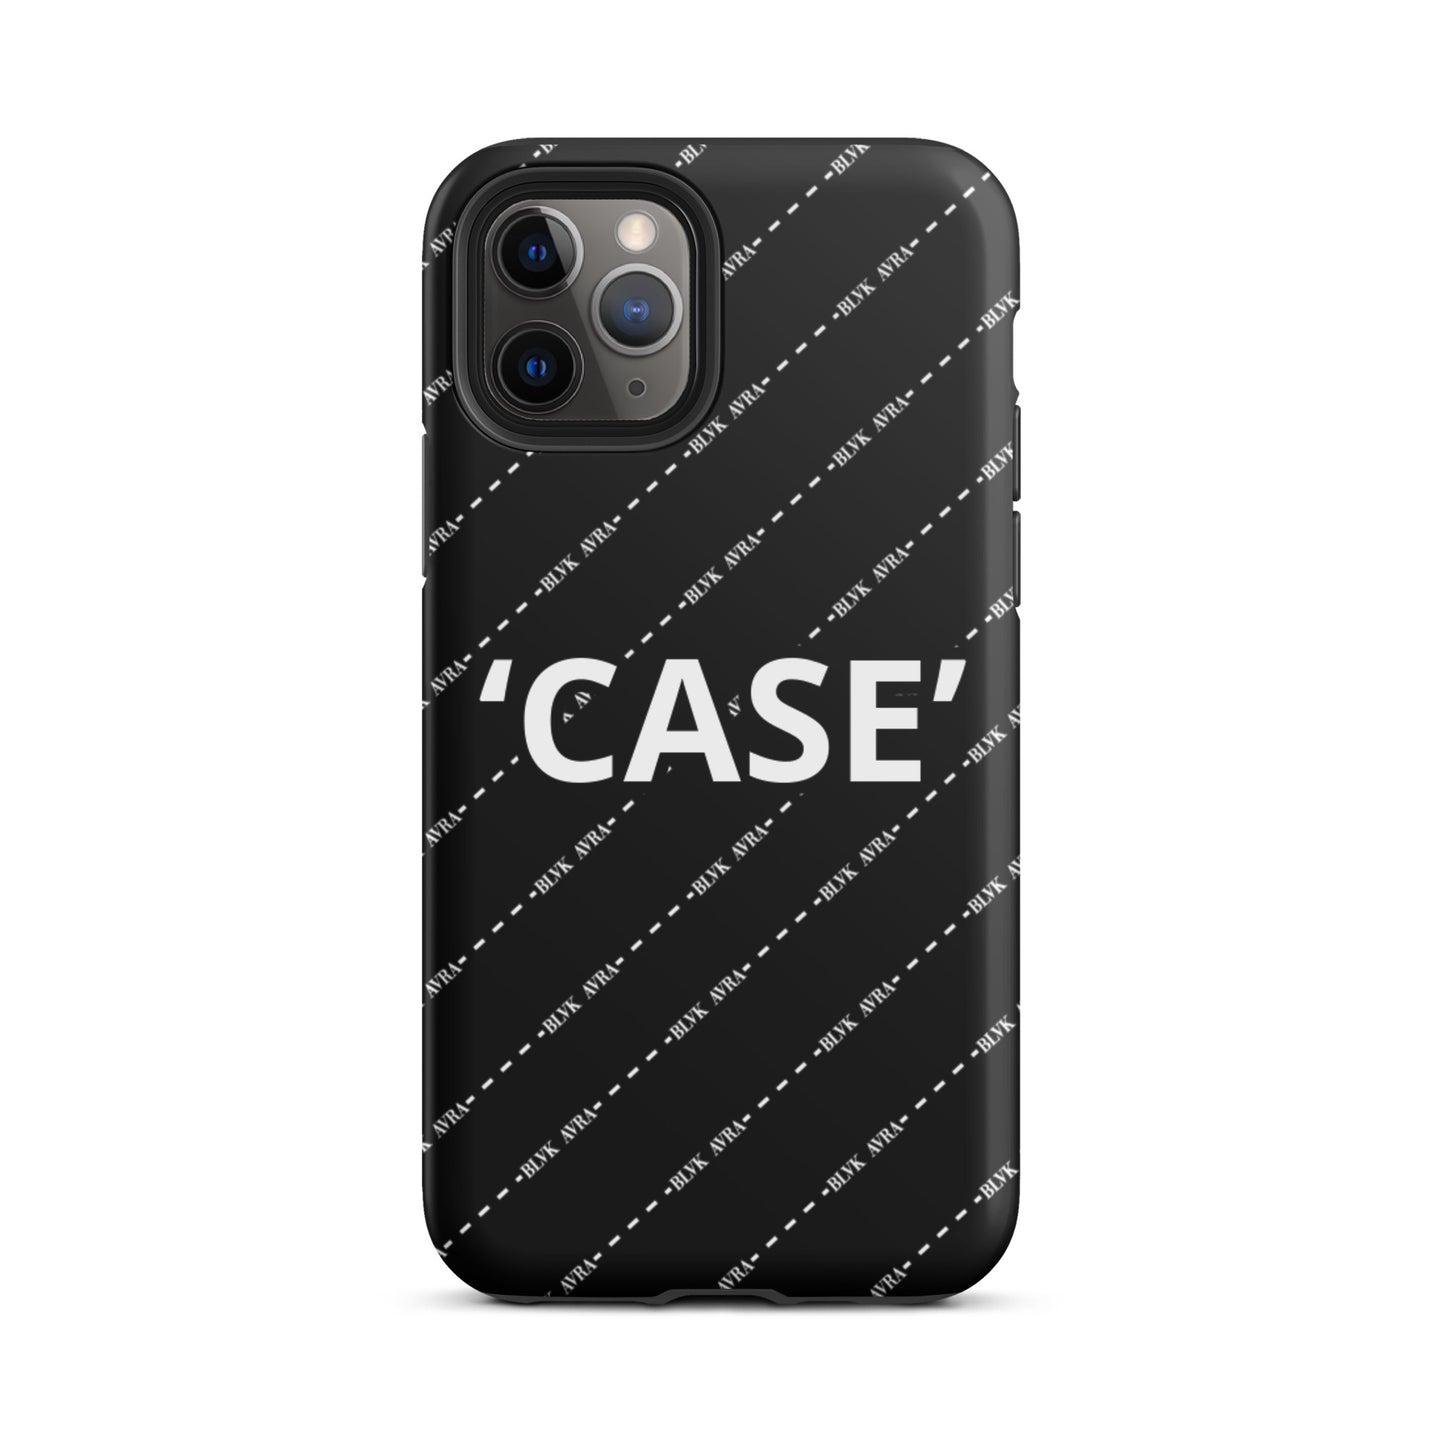 Tough iPhone case